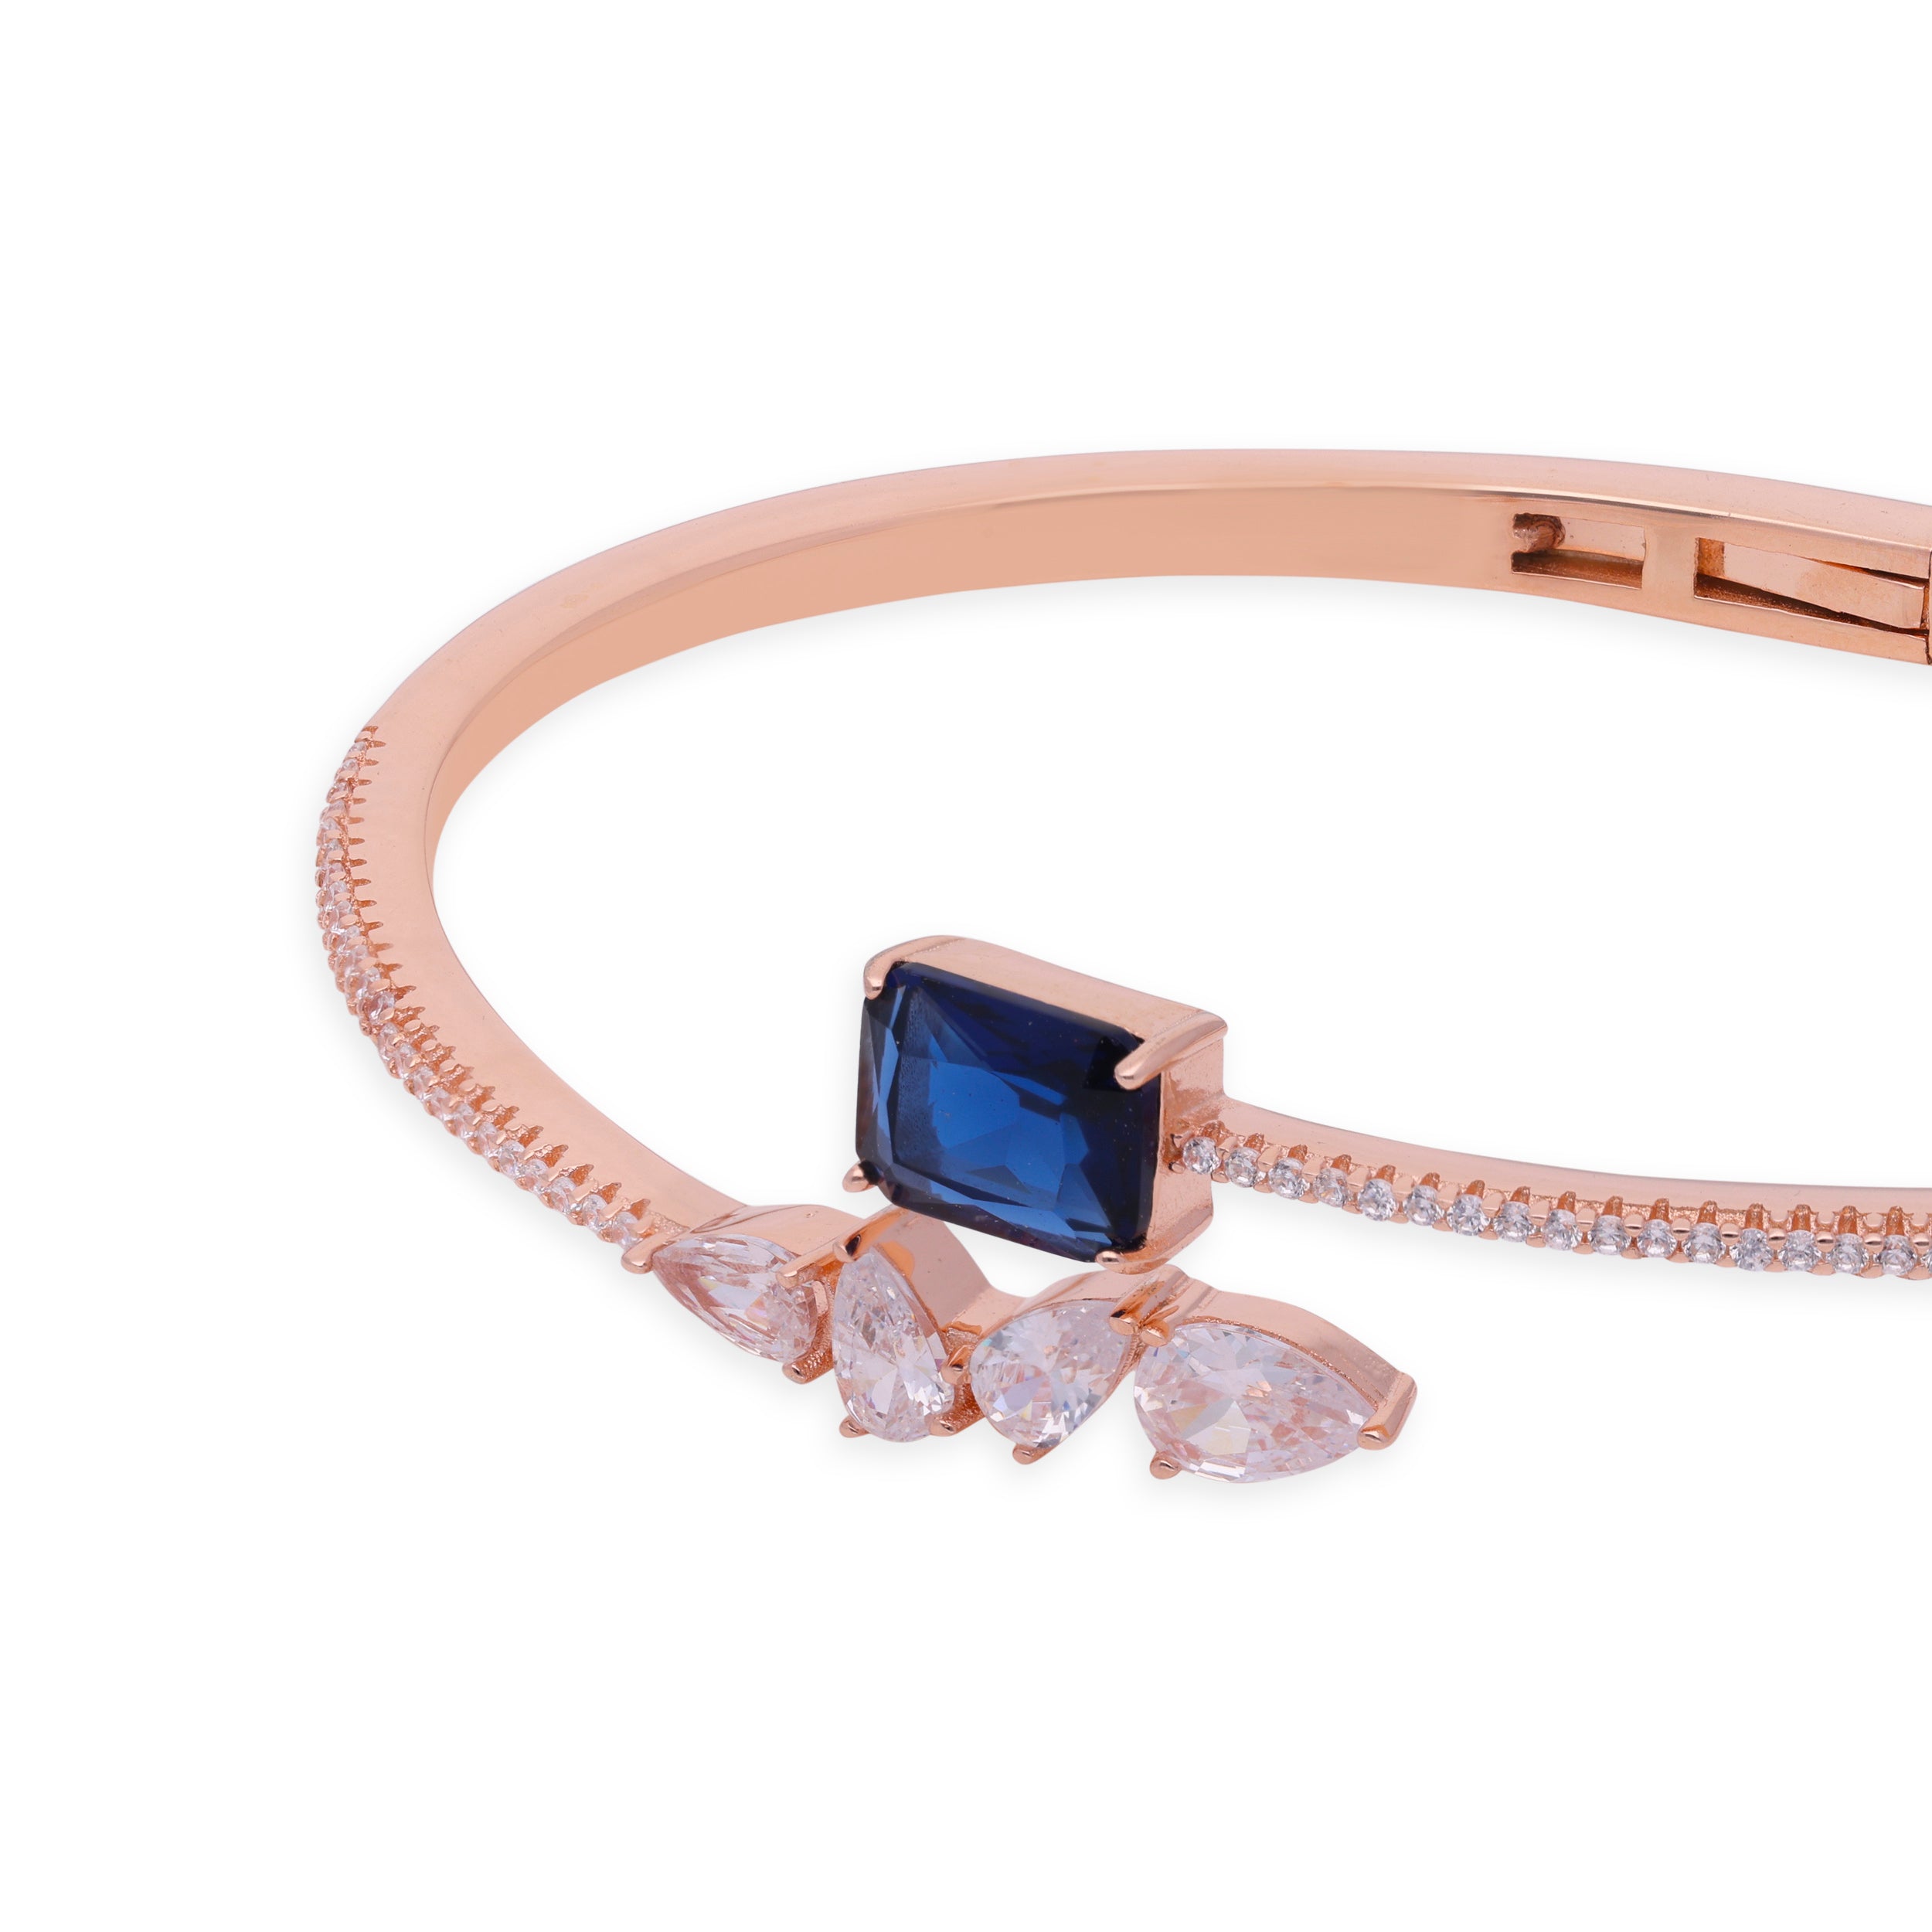 Contemporary Design Rose Gold Cuff Bracelet | SKU : 0003115688, 0003115671 , 0003115725